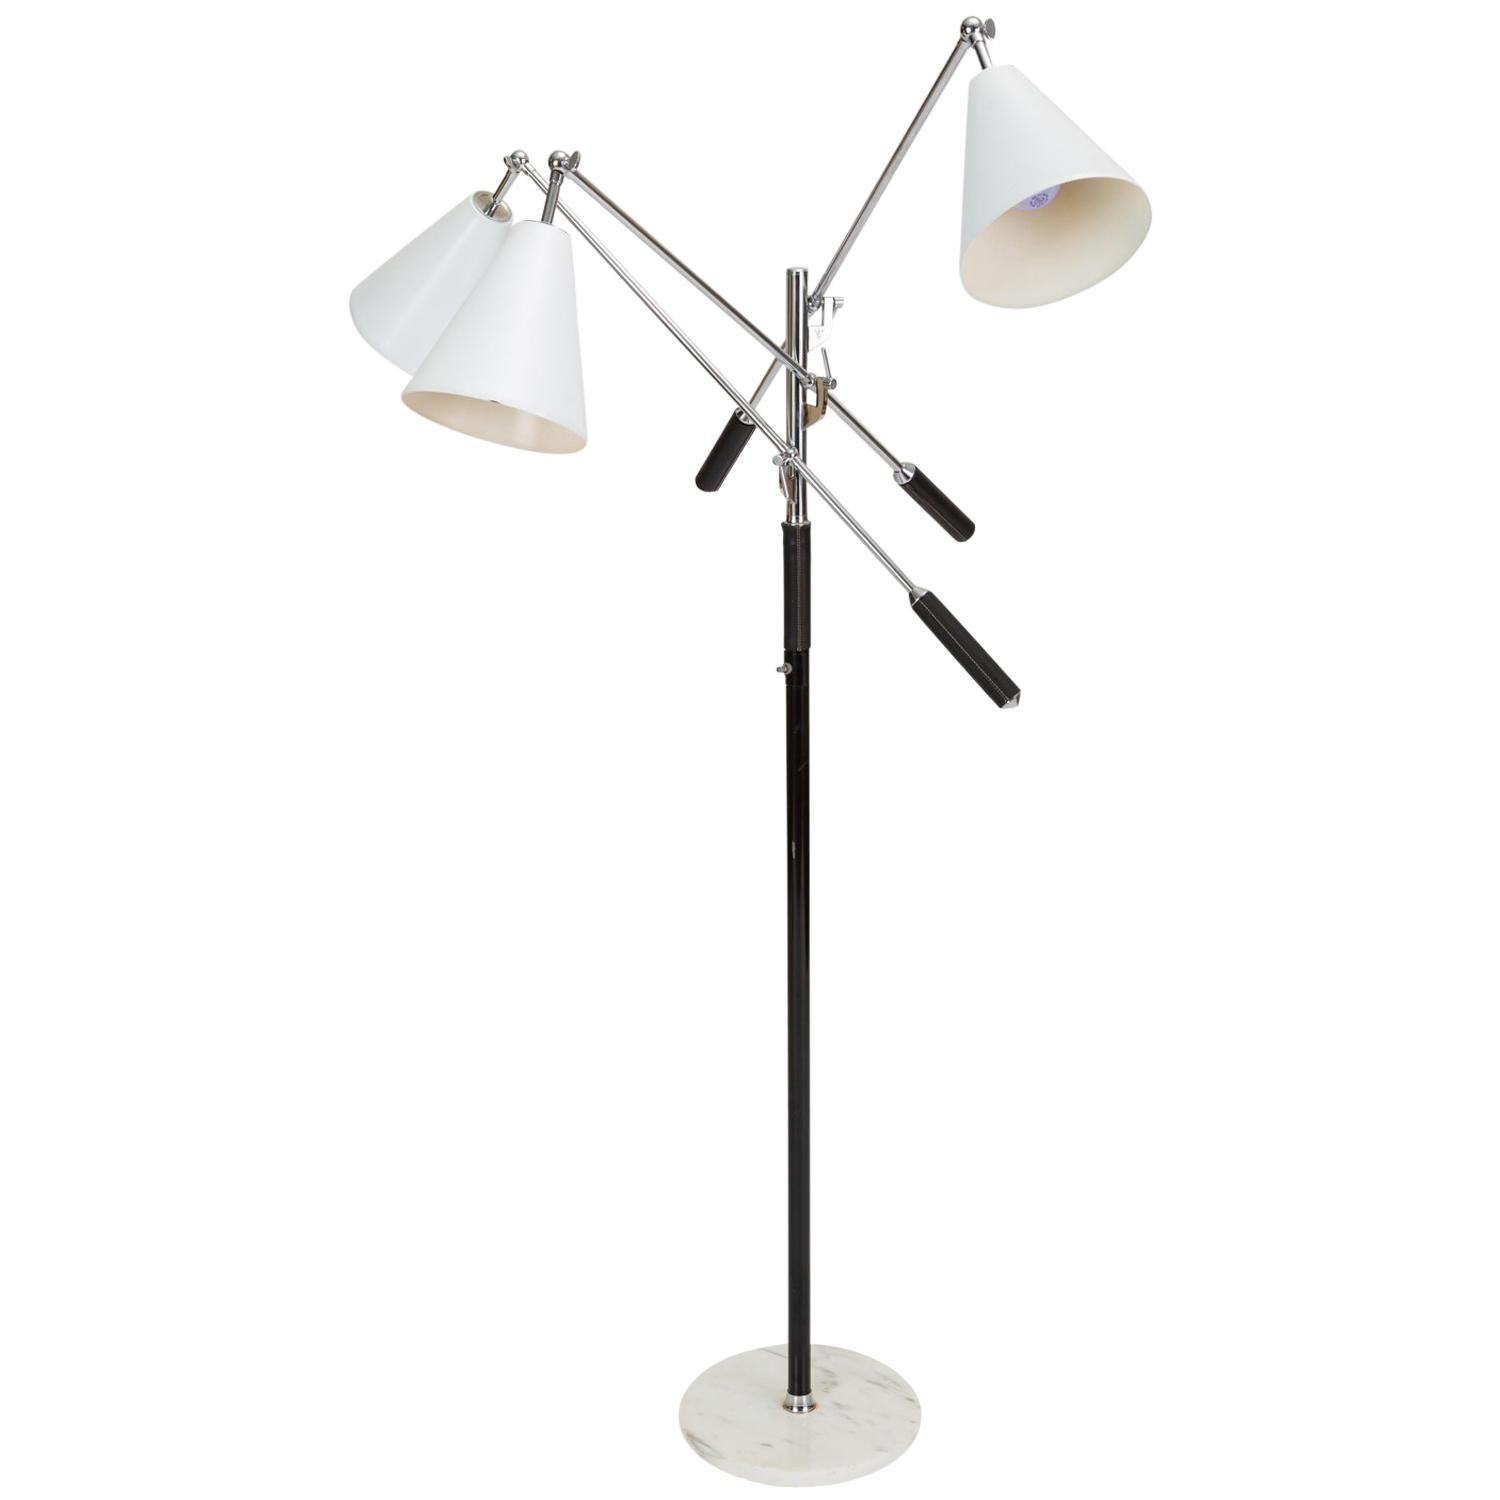 Three-Arm Italian Modernist Floor Lamp with Marble Base